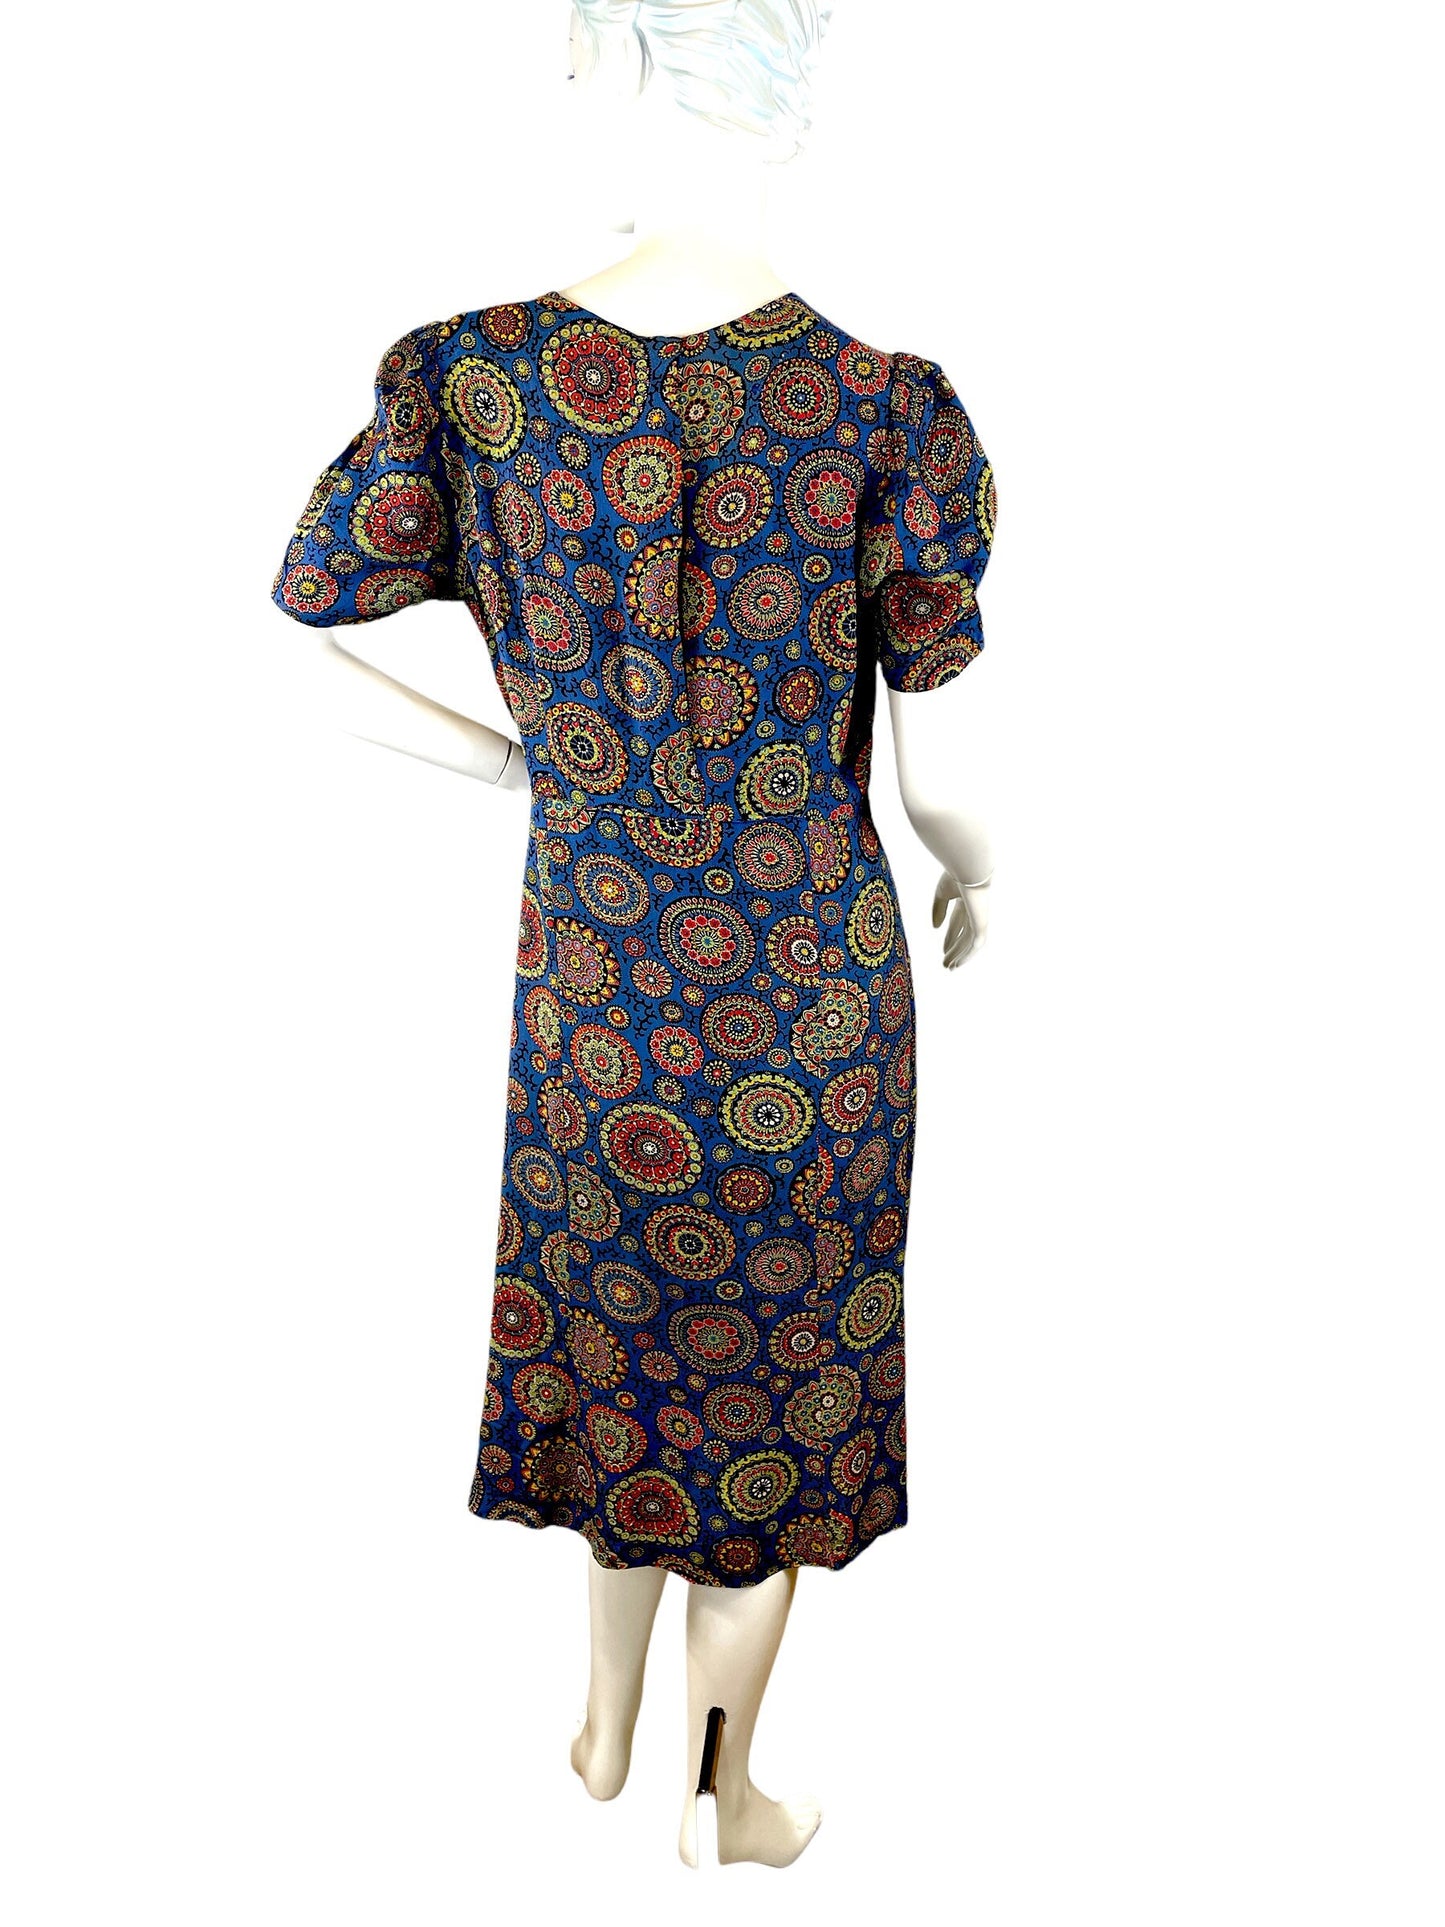 1920s rose window print silk dress Size S/M